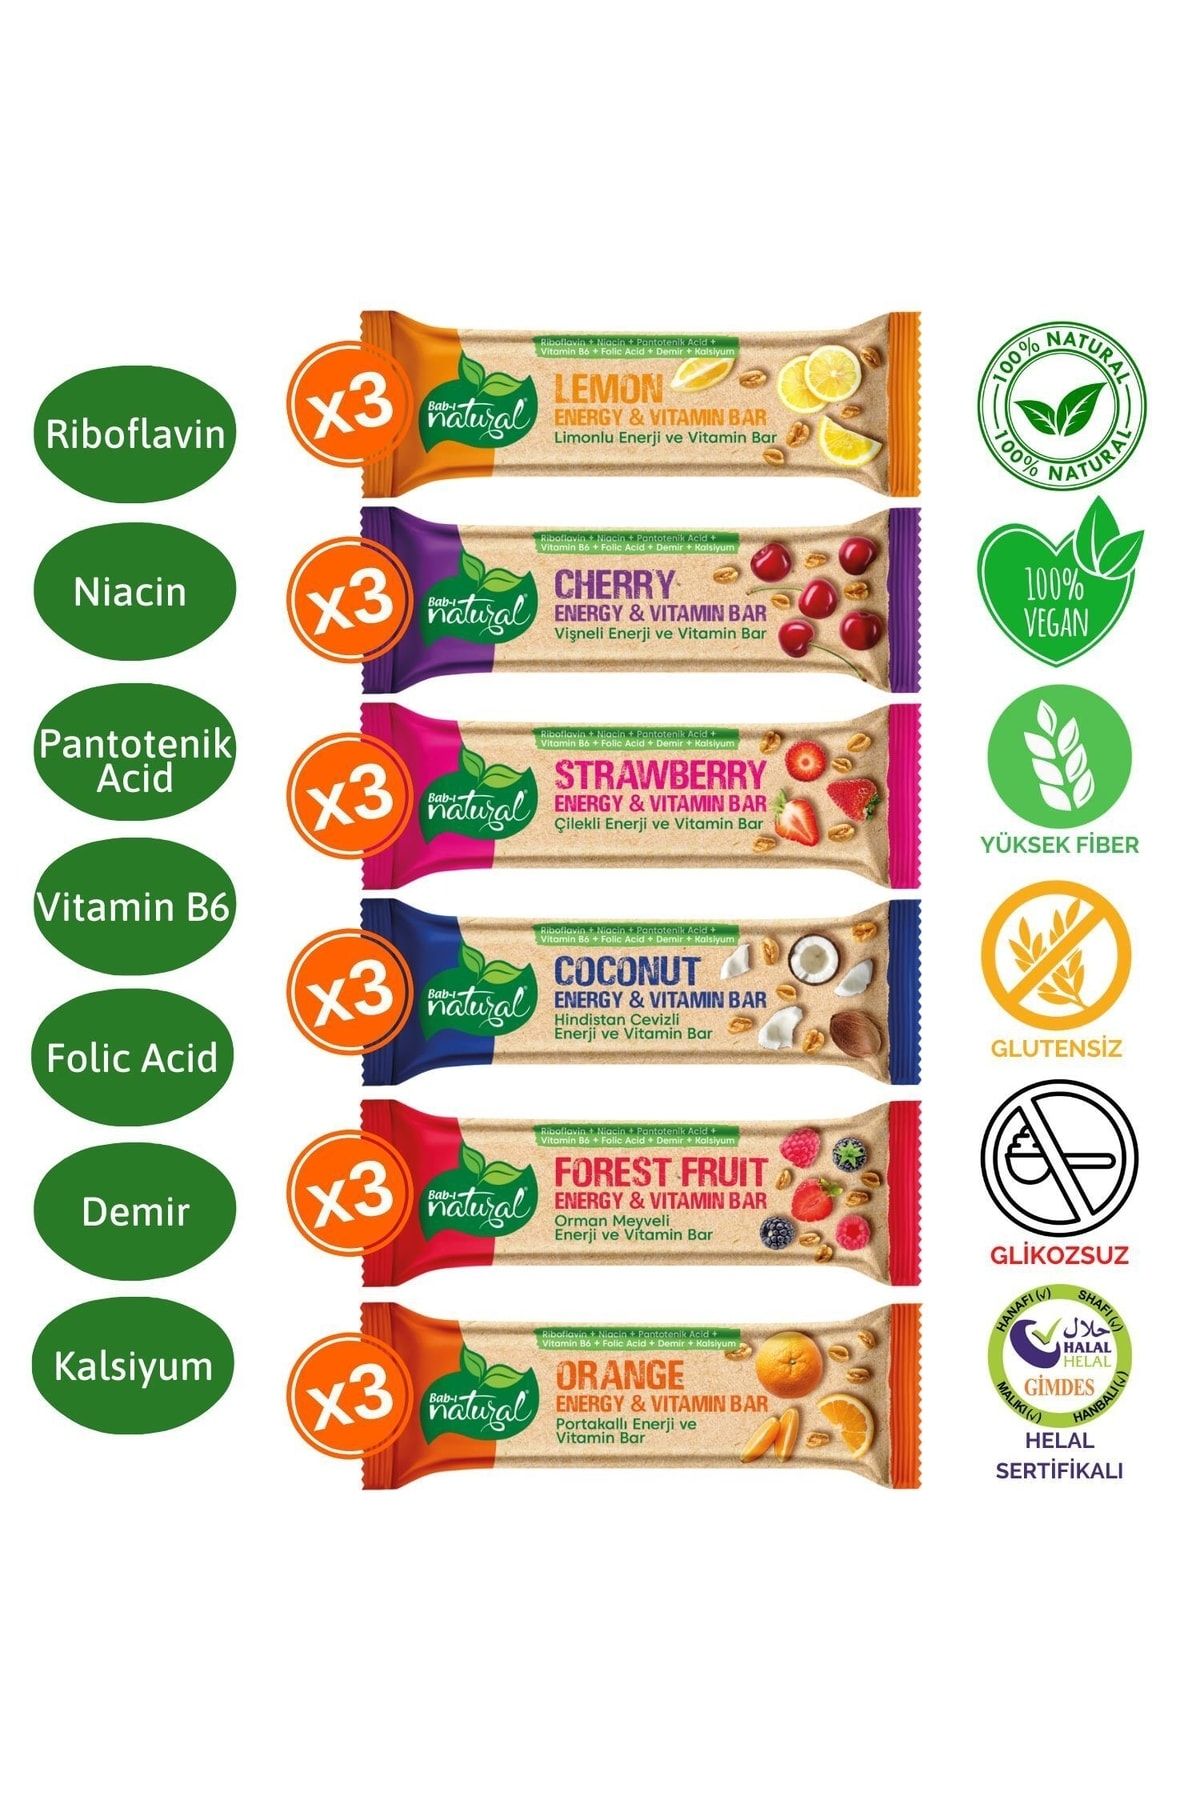 Bab ı Natural Enerji Bar Ve Vitamin Bar Karma Paket 18 Adet (VEGAN GİMDES HELAL SERTİFİKALIDIR)